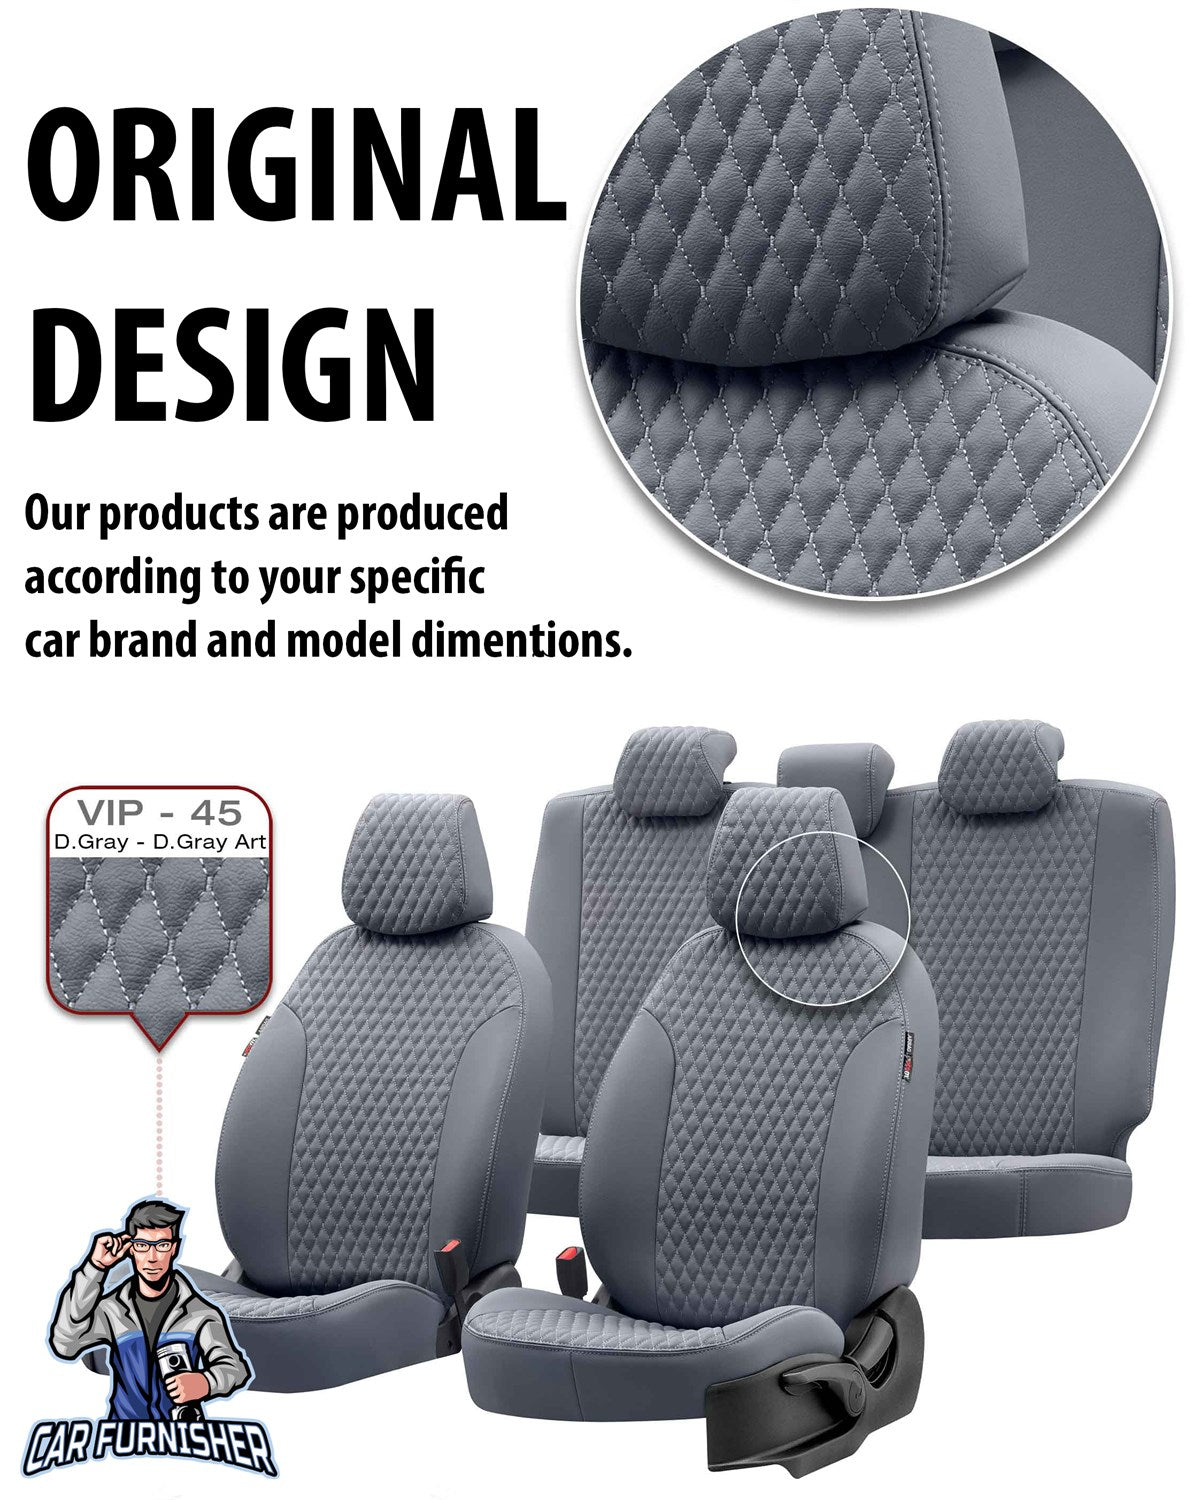 Renault Laguna Seat Covers Amsterdam Leather Design Black Leather